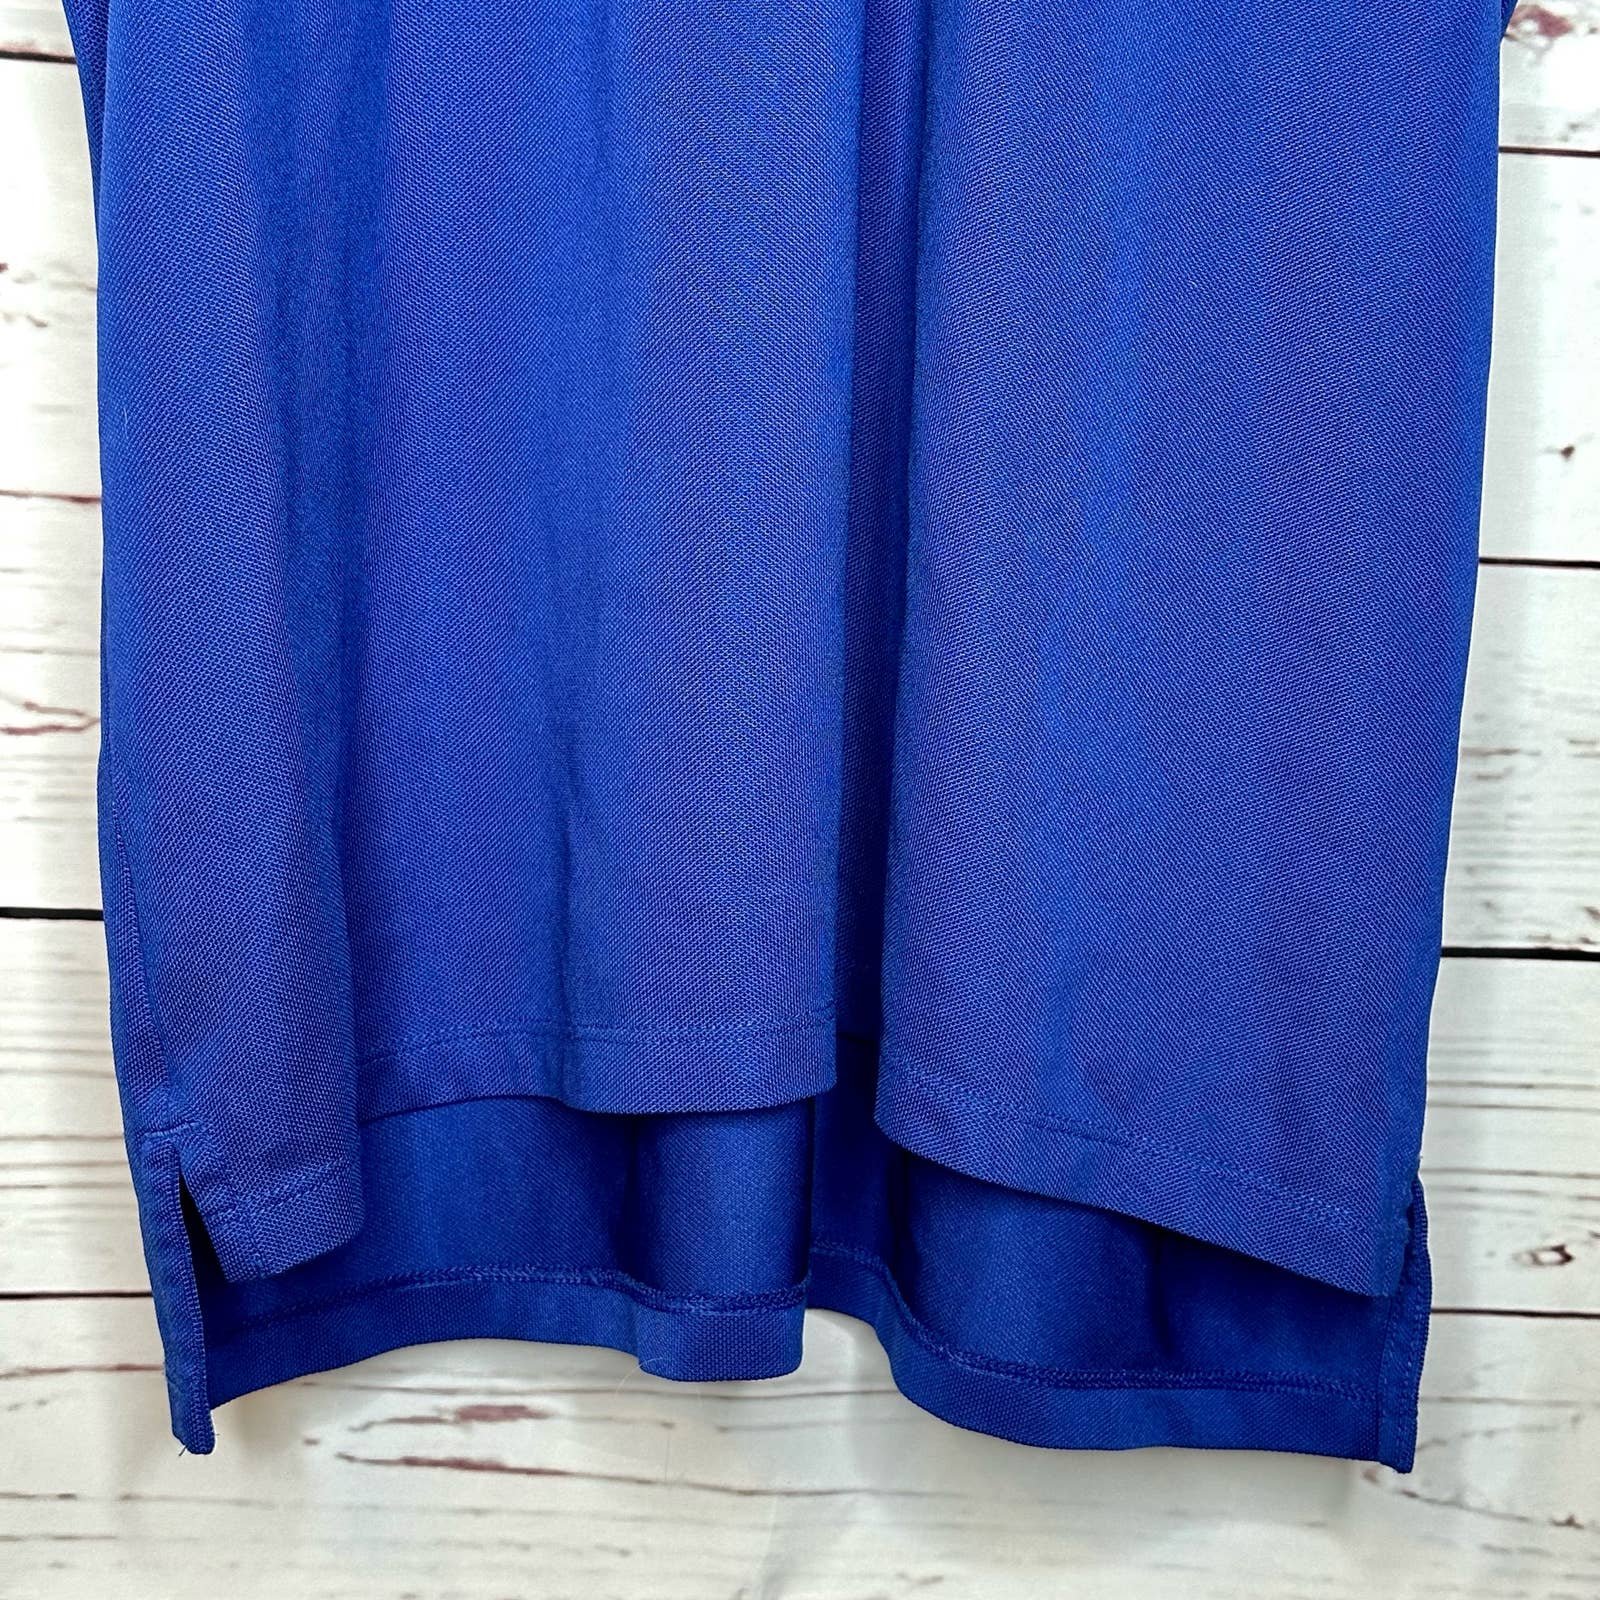 Stylish Lauren Ralph Lauren Blue Short Sleeve Polo Shirt Size Large POGTOkYtg Cool